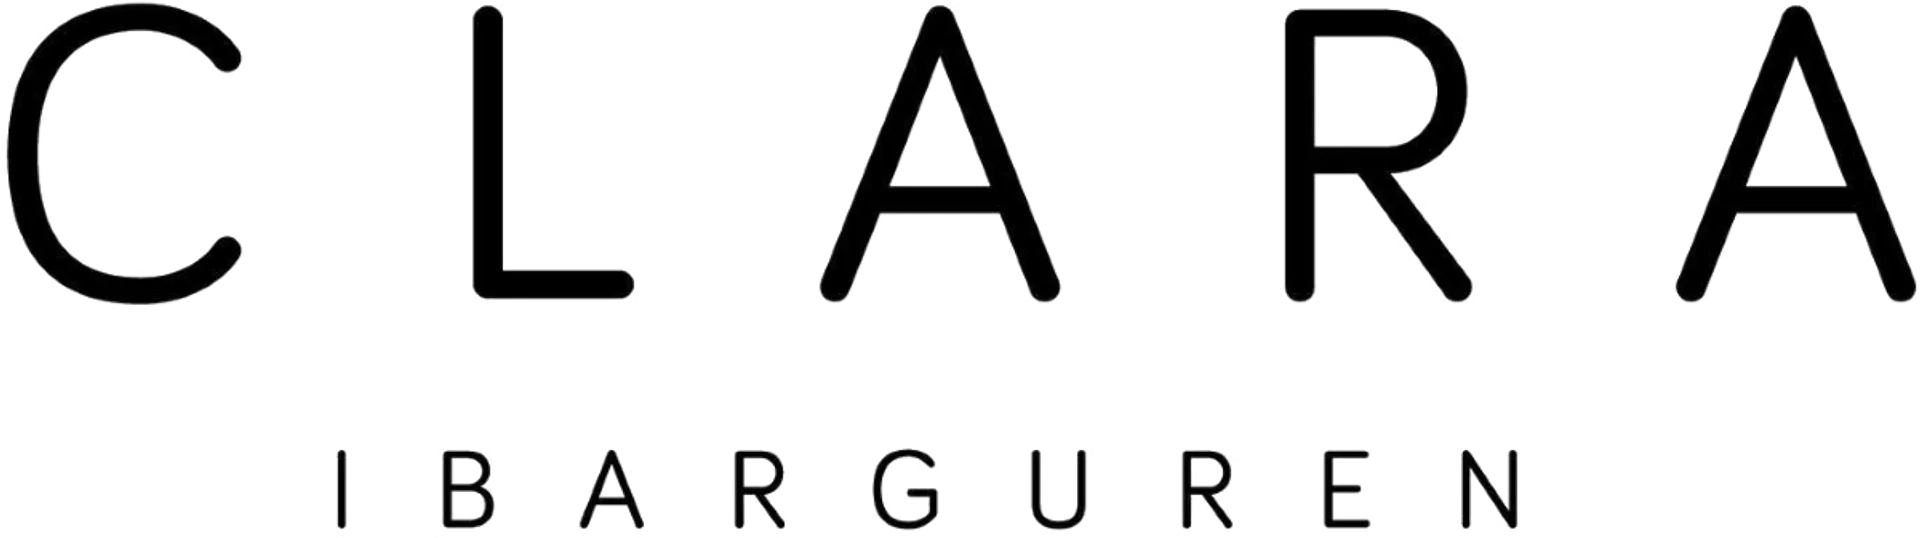 CLARA IBARGUREN logo de catálogo